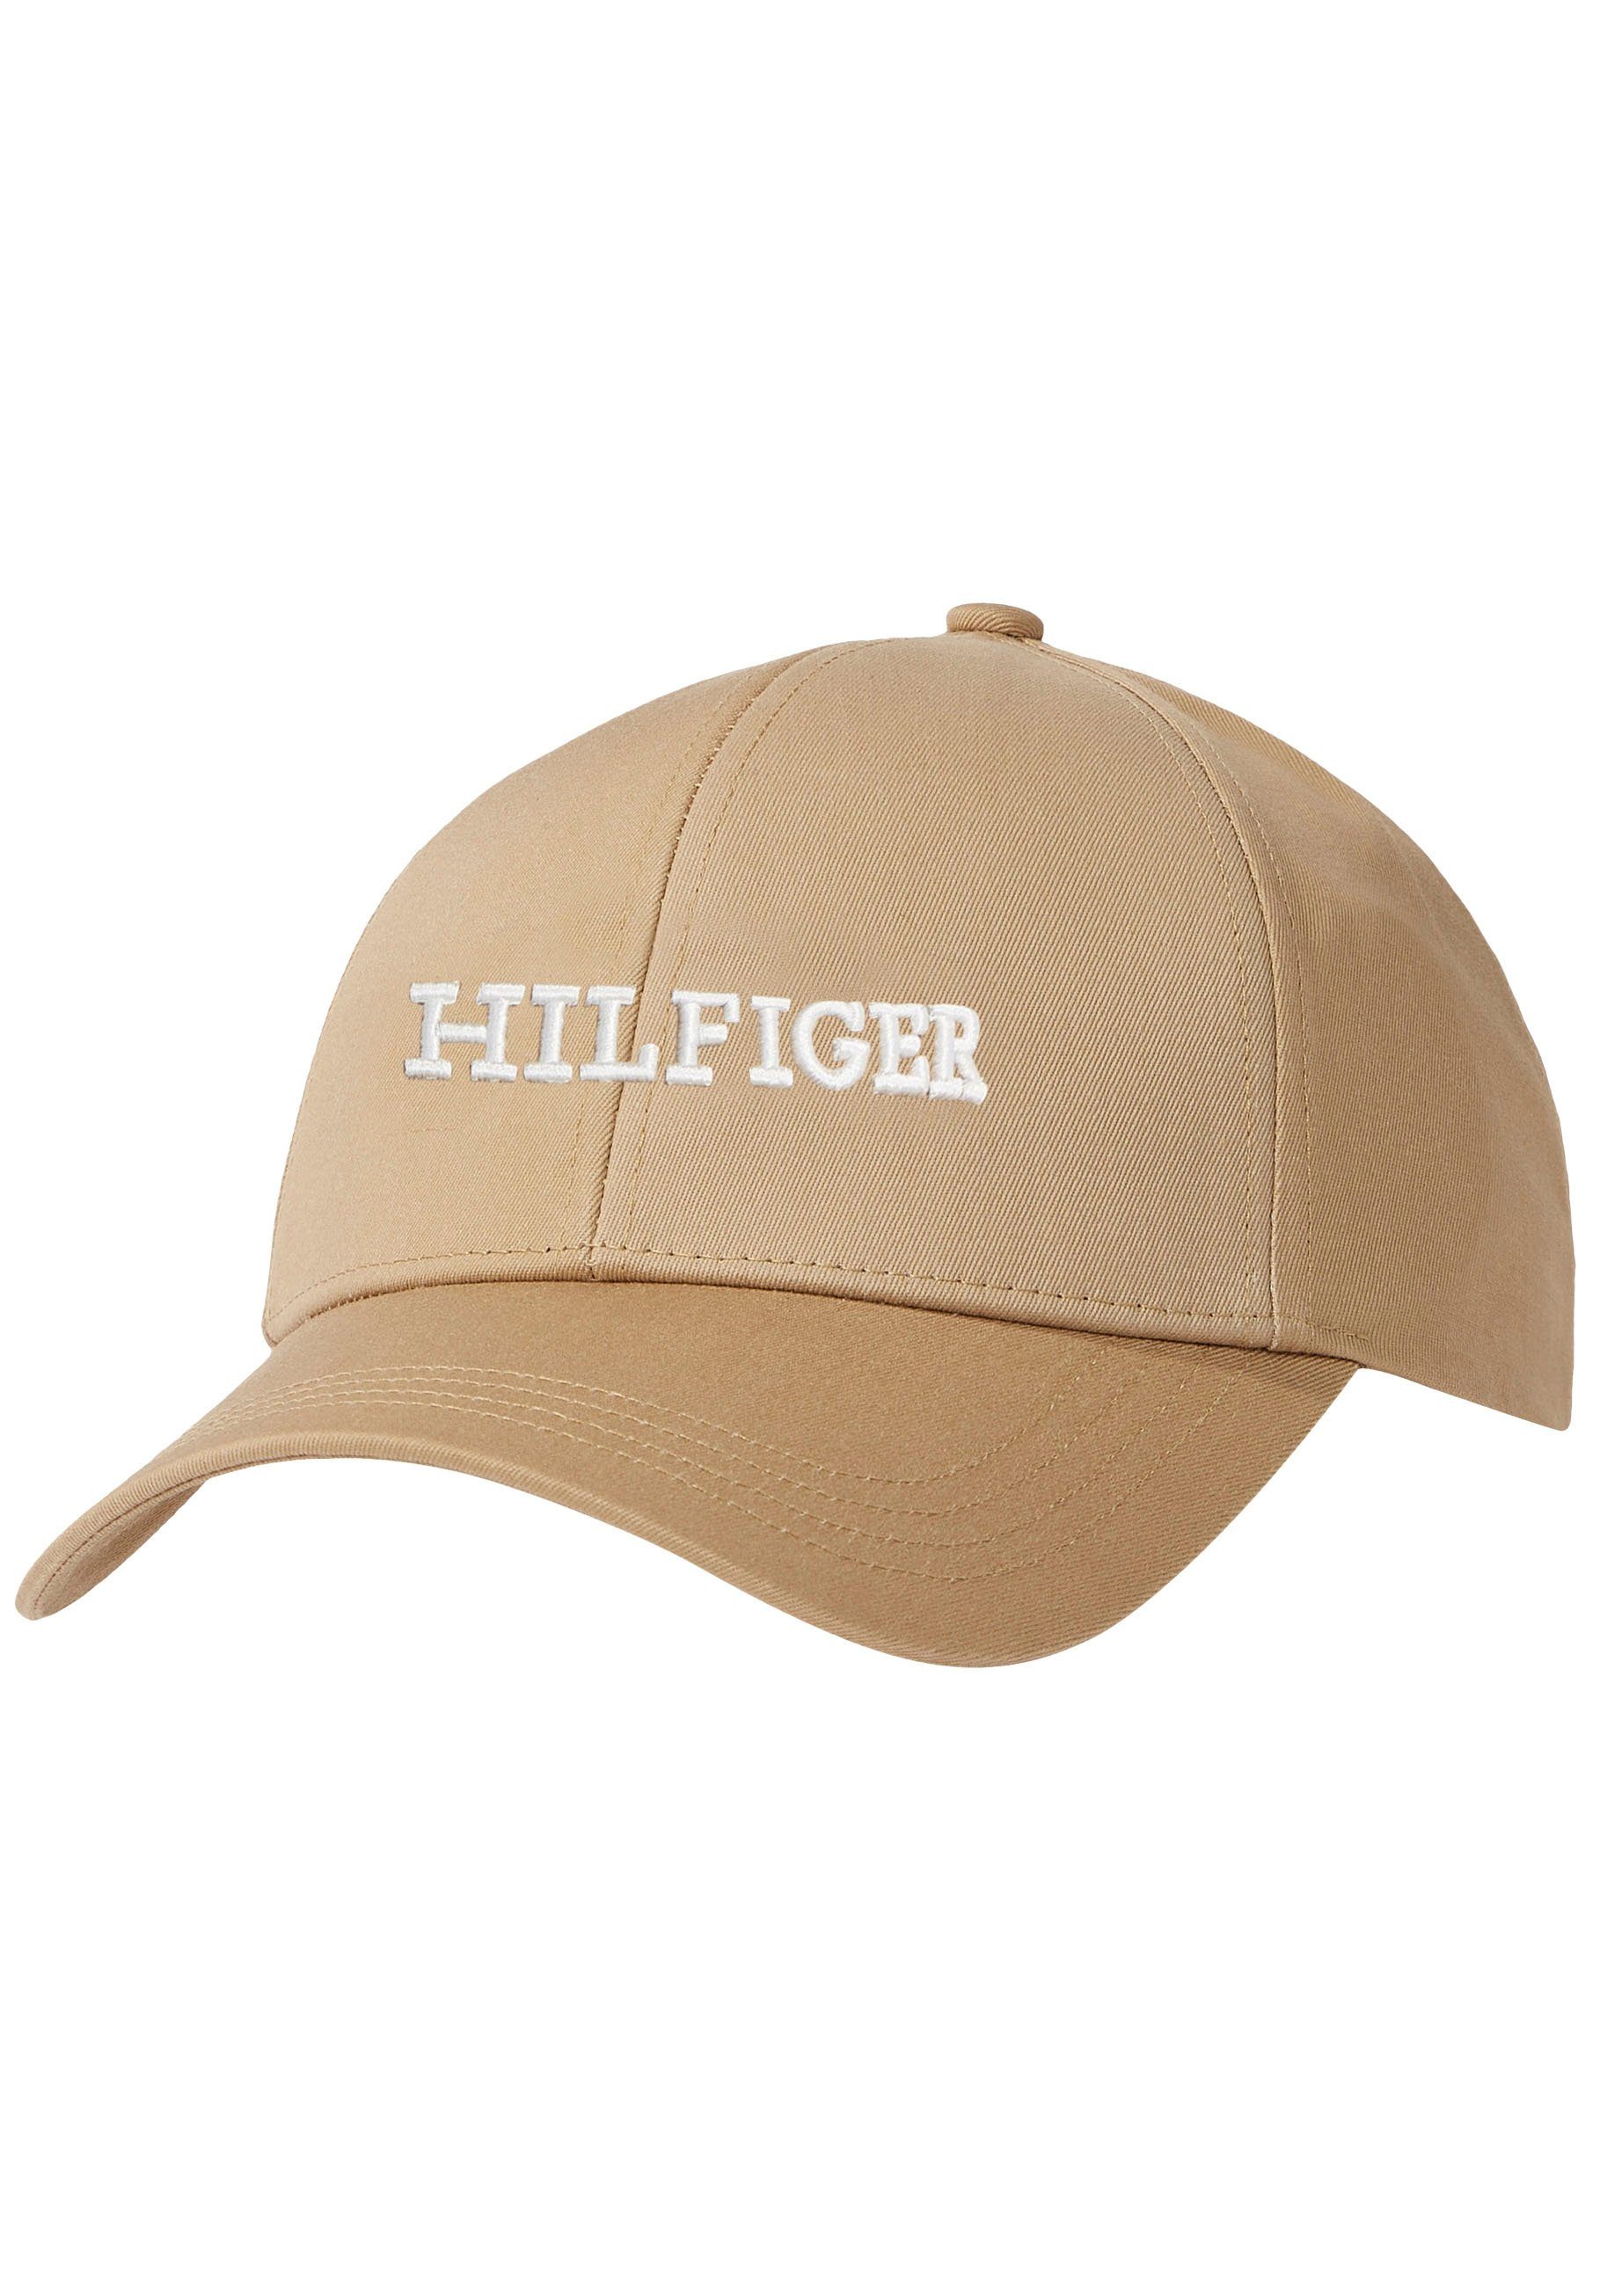 Khaki Baseball Classic HILFIGER Cap gesticktem Monogramm Tommy Hilfiger Hilfiger mit CAP vorn